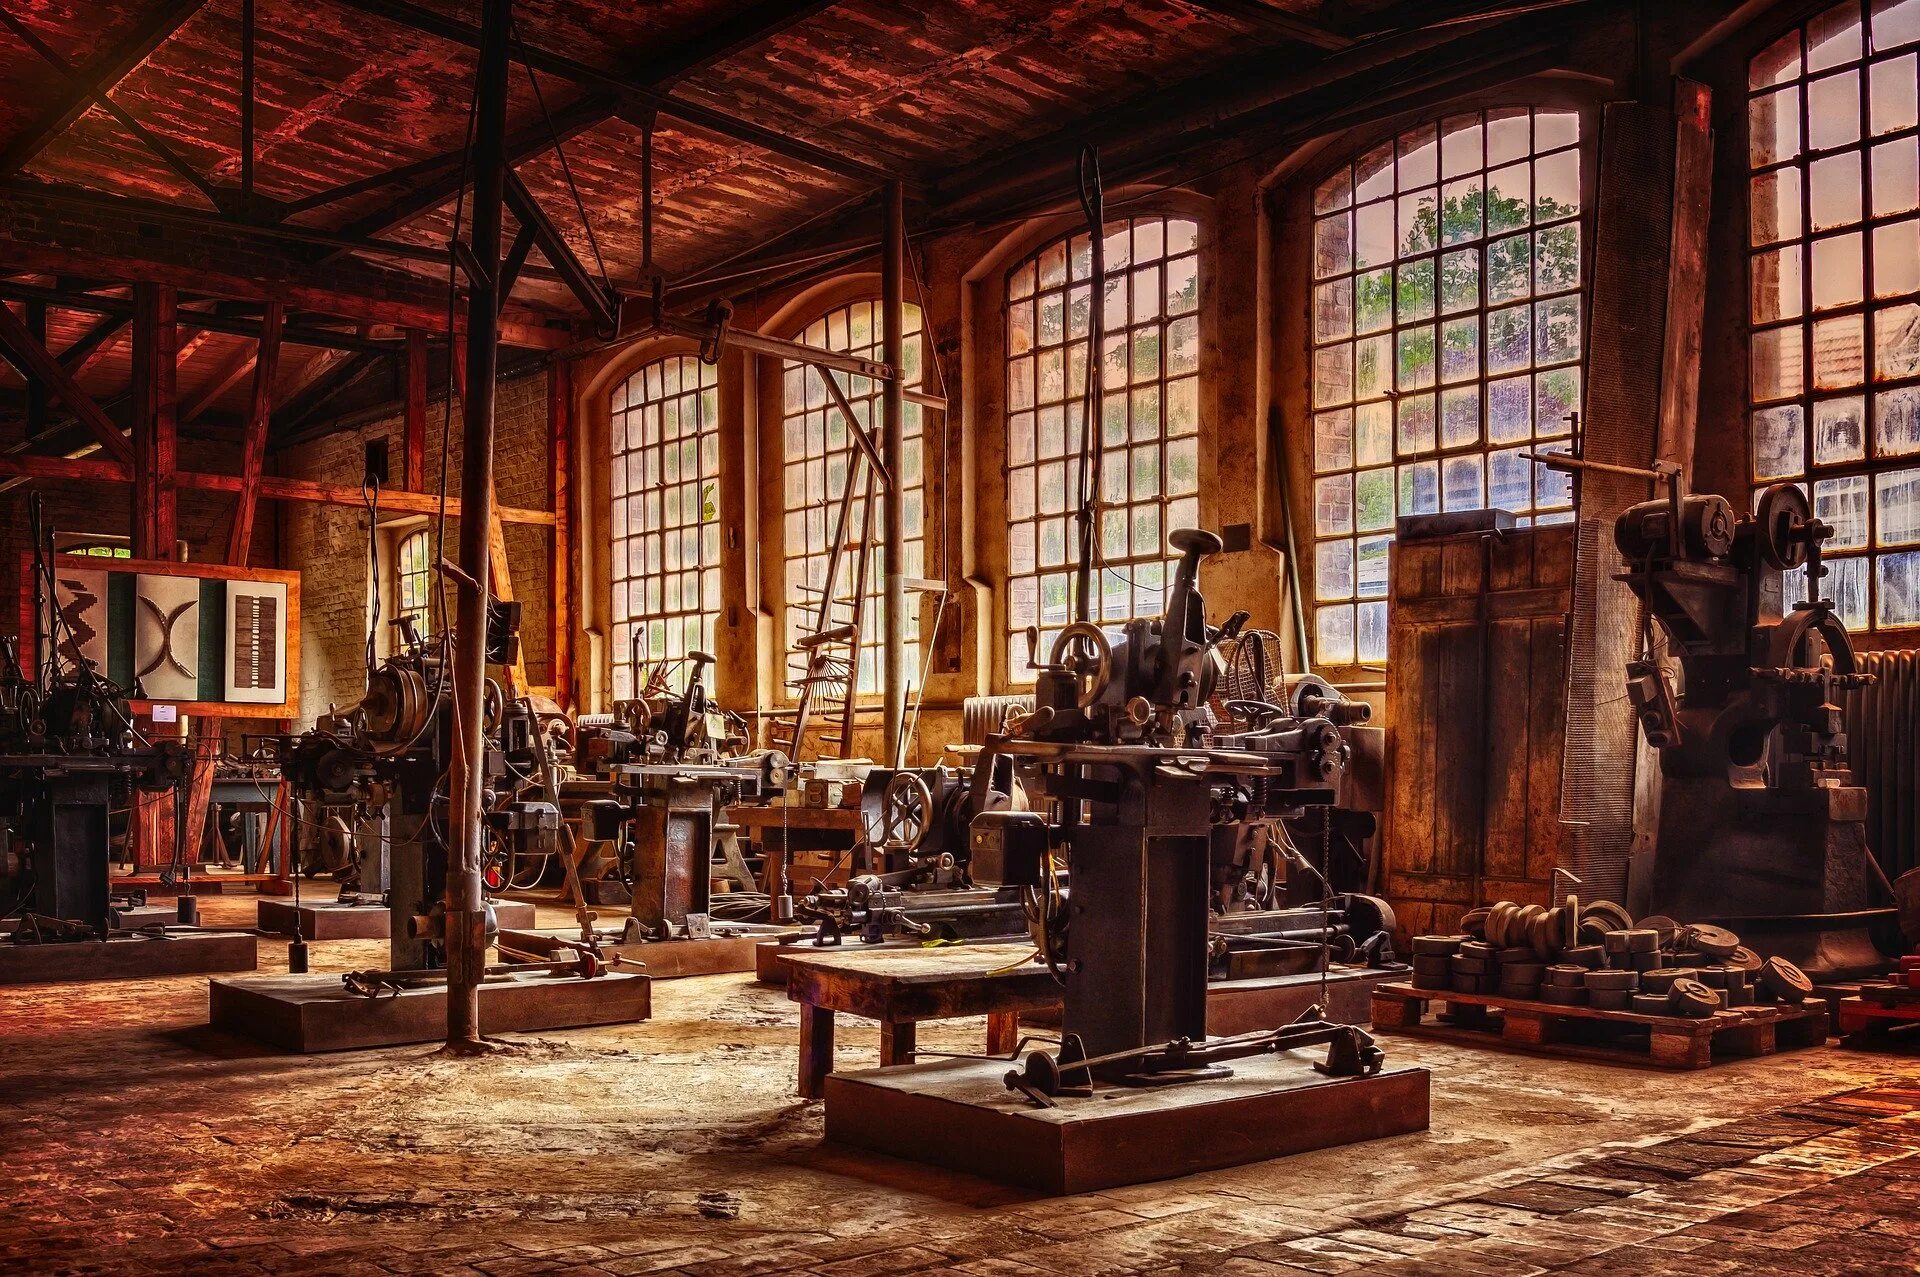 Франция металлургическая мануфактура 17 век. Фабрика 18 век Англия. Фабрика 18 века в Англии. Мануфактура и фабрика в Англии 18 век.